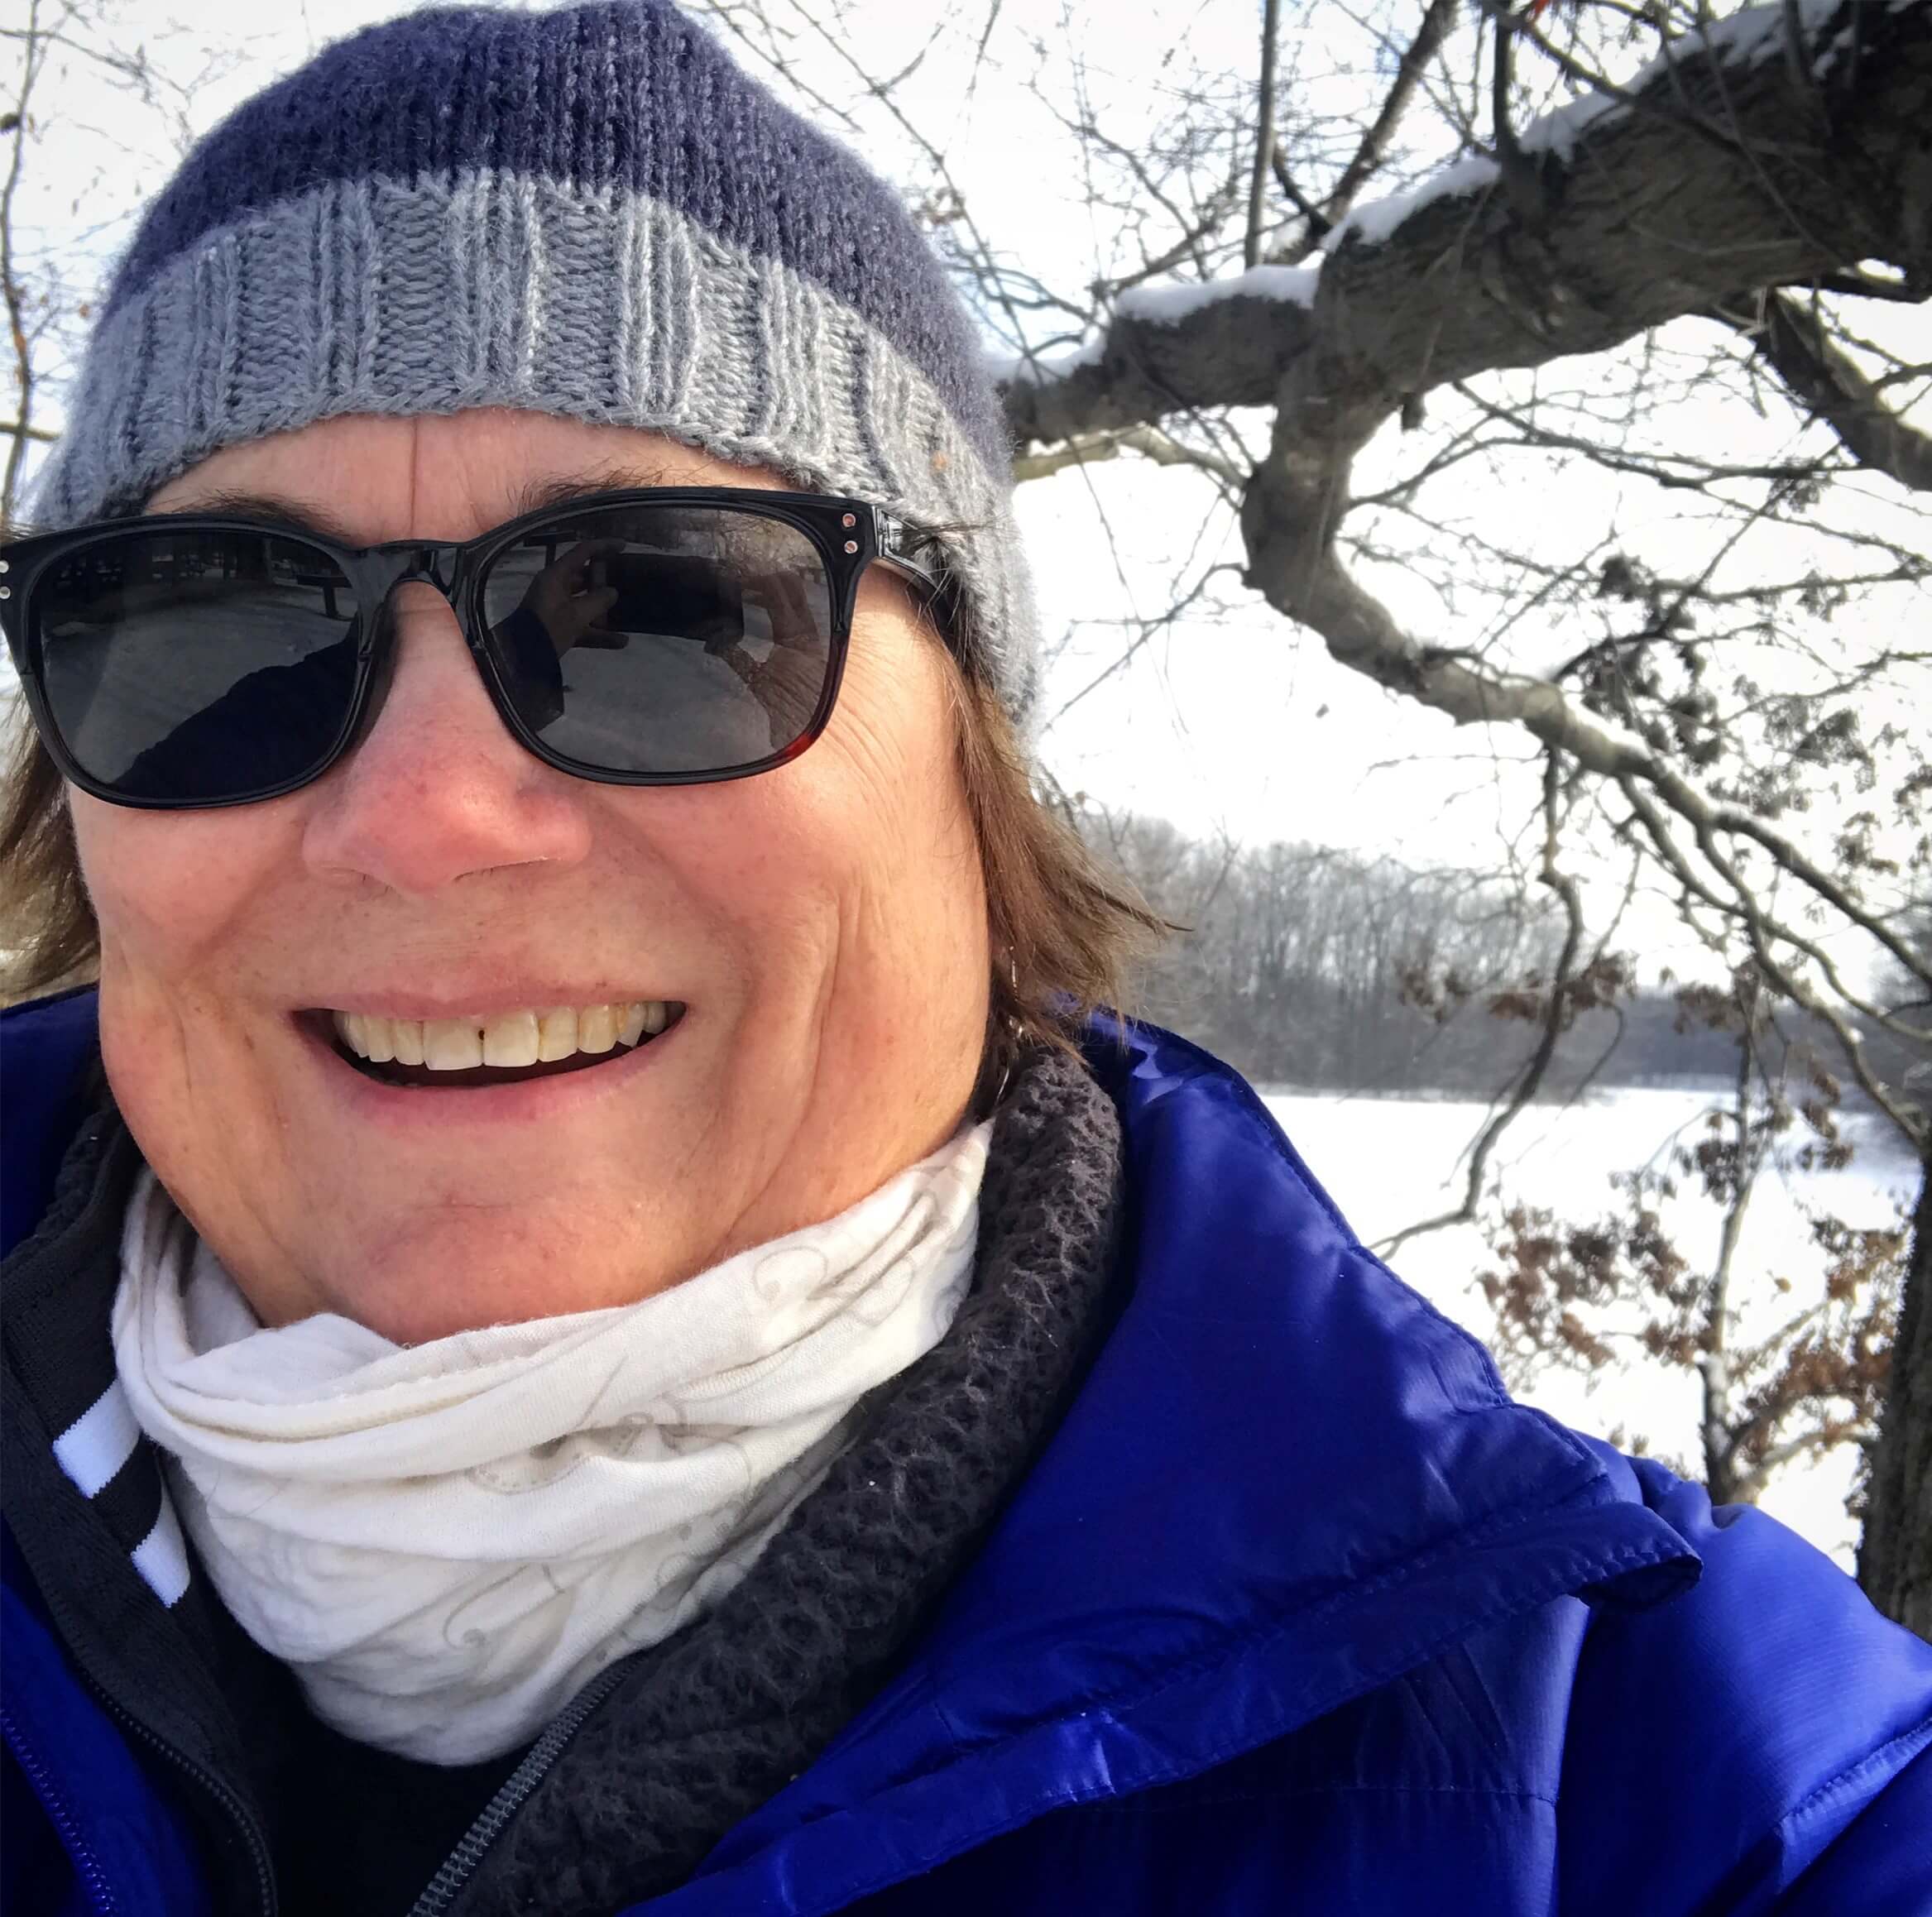 Visit Findlay Blogger Julie shares how the trails at Van Buren State Park helped her battle Cabin Fever this winter - read about her experience here! • VisitFindlay.com